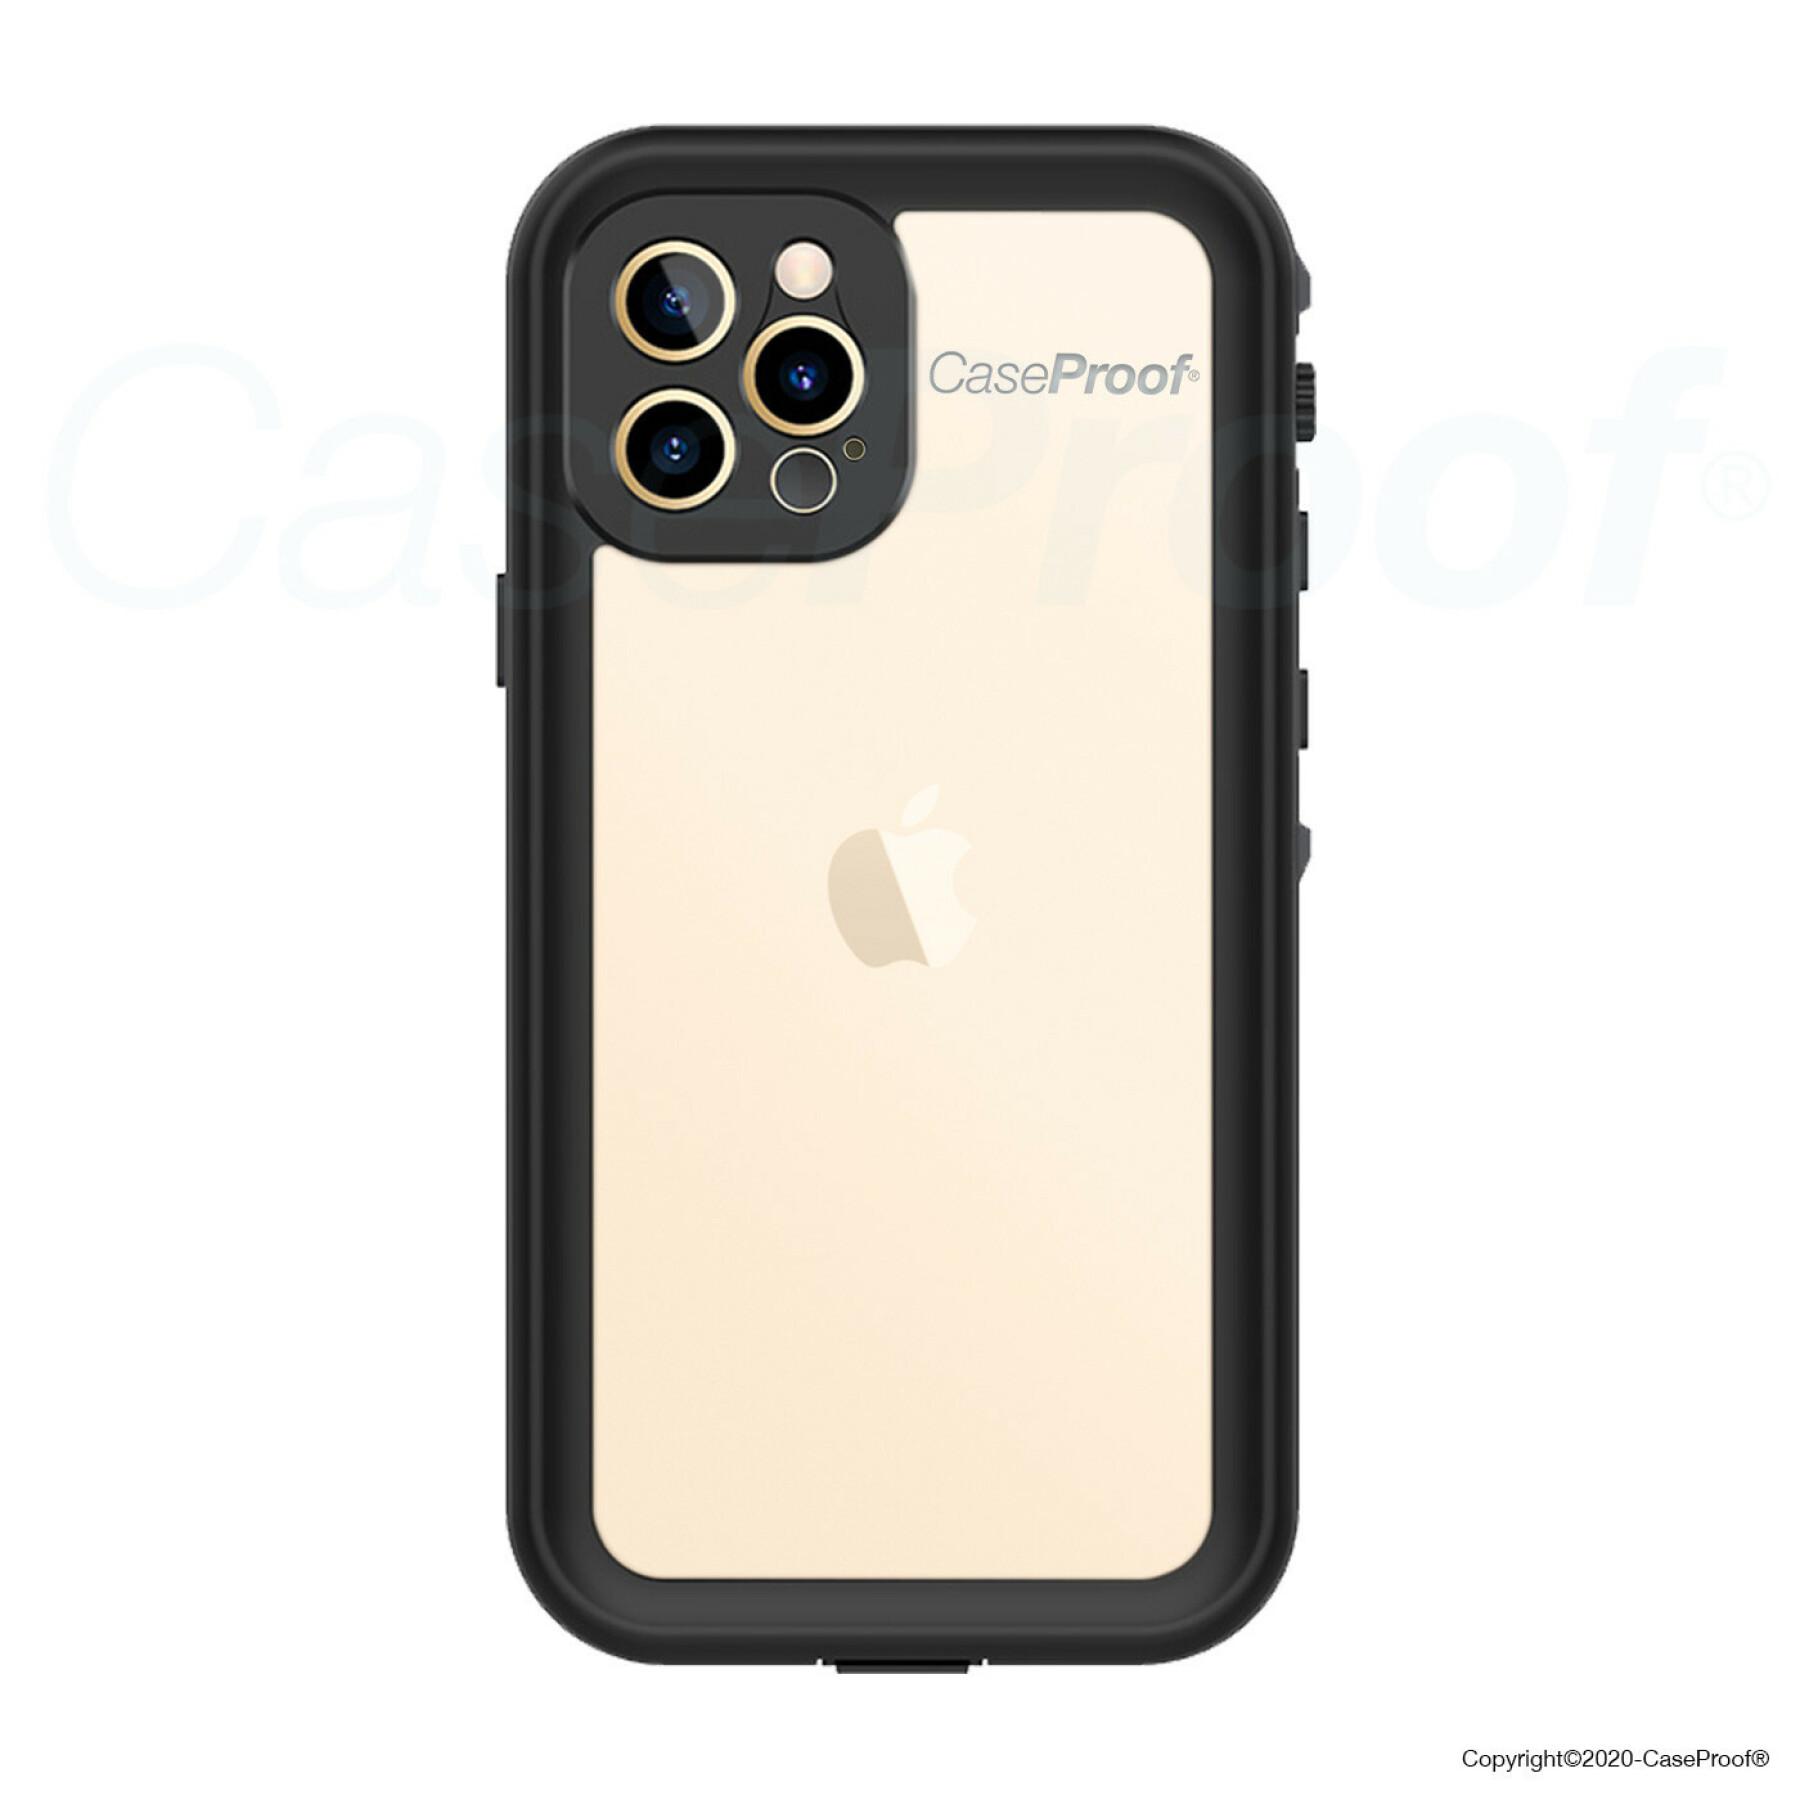 iphone 12 pro max smartphone case waterproof and shockproof CaseProof